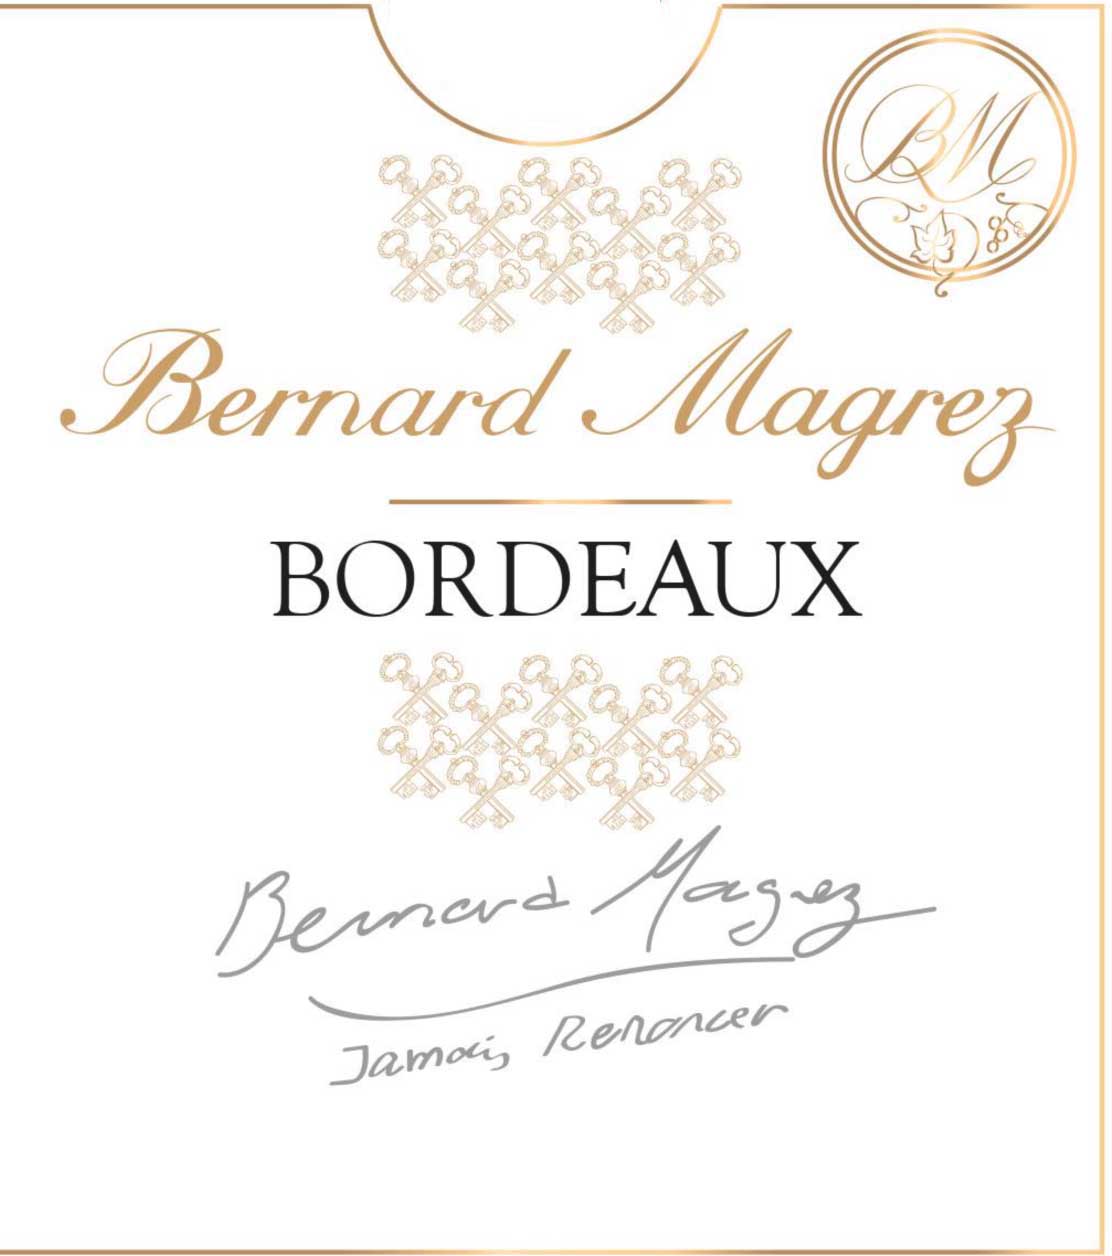 Bernard Magrez - White label